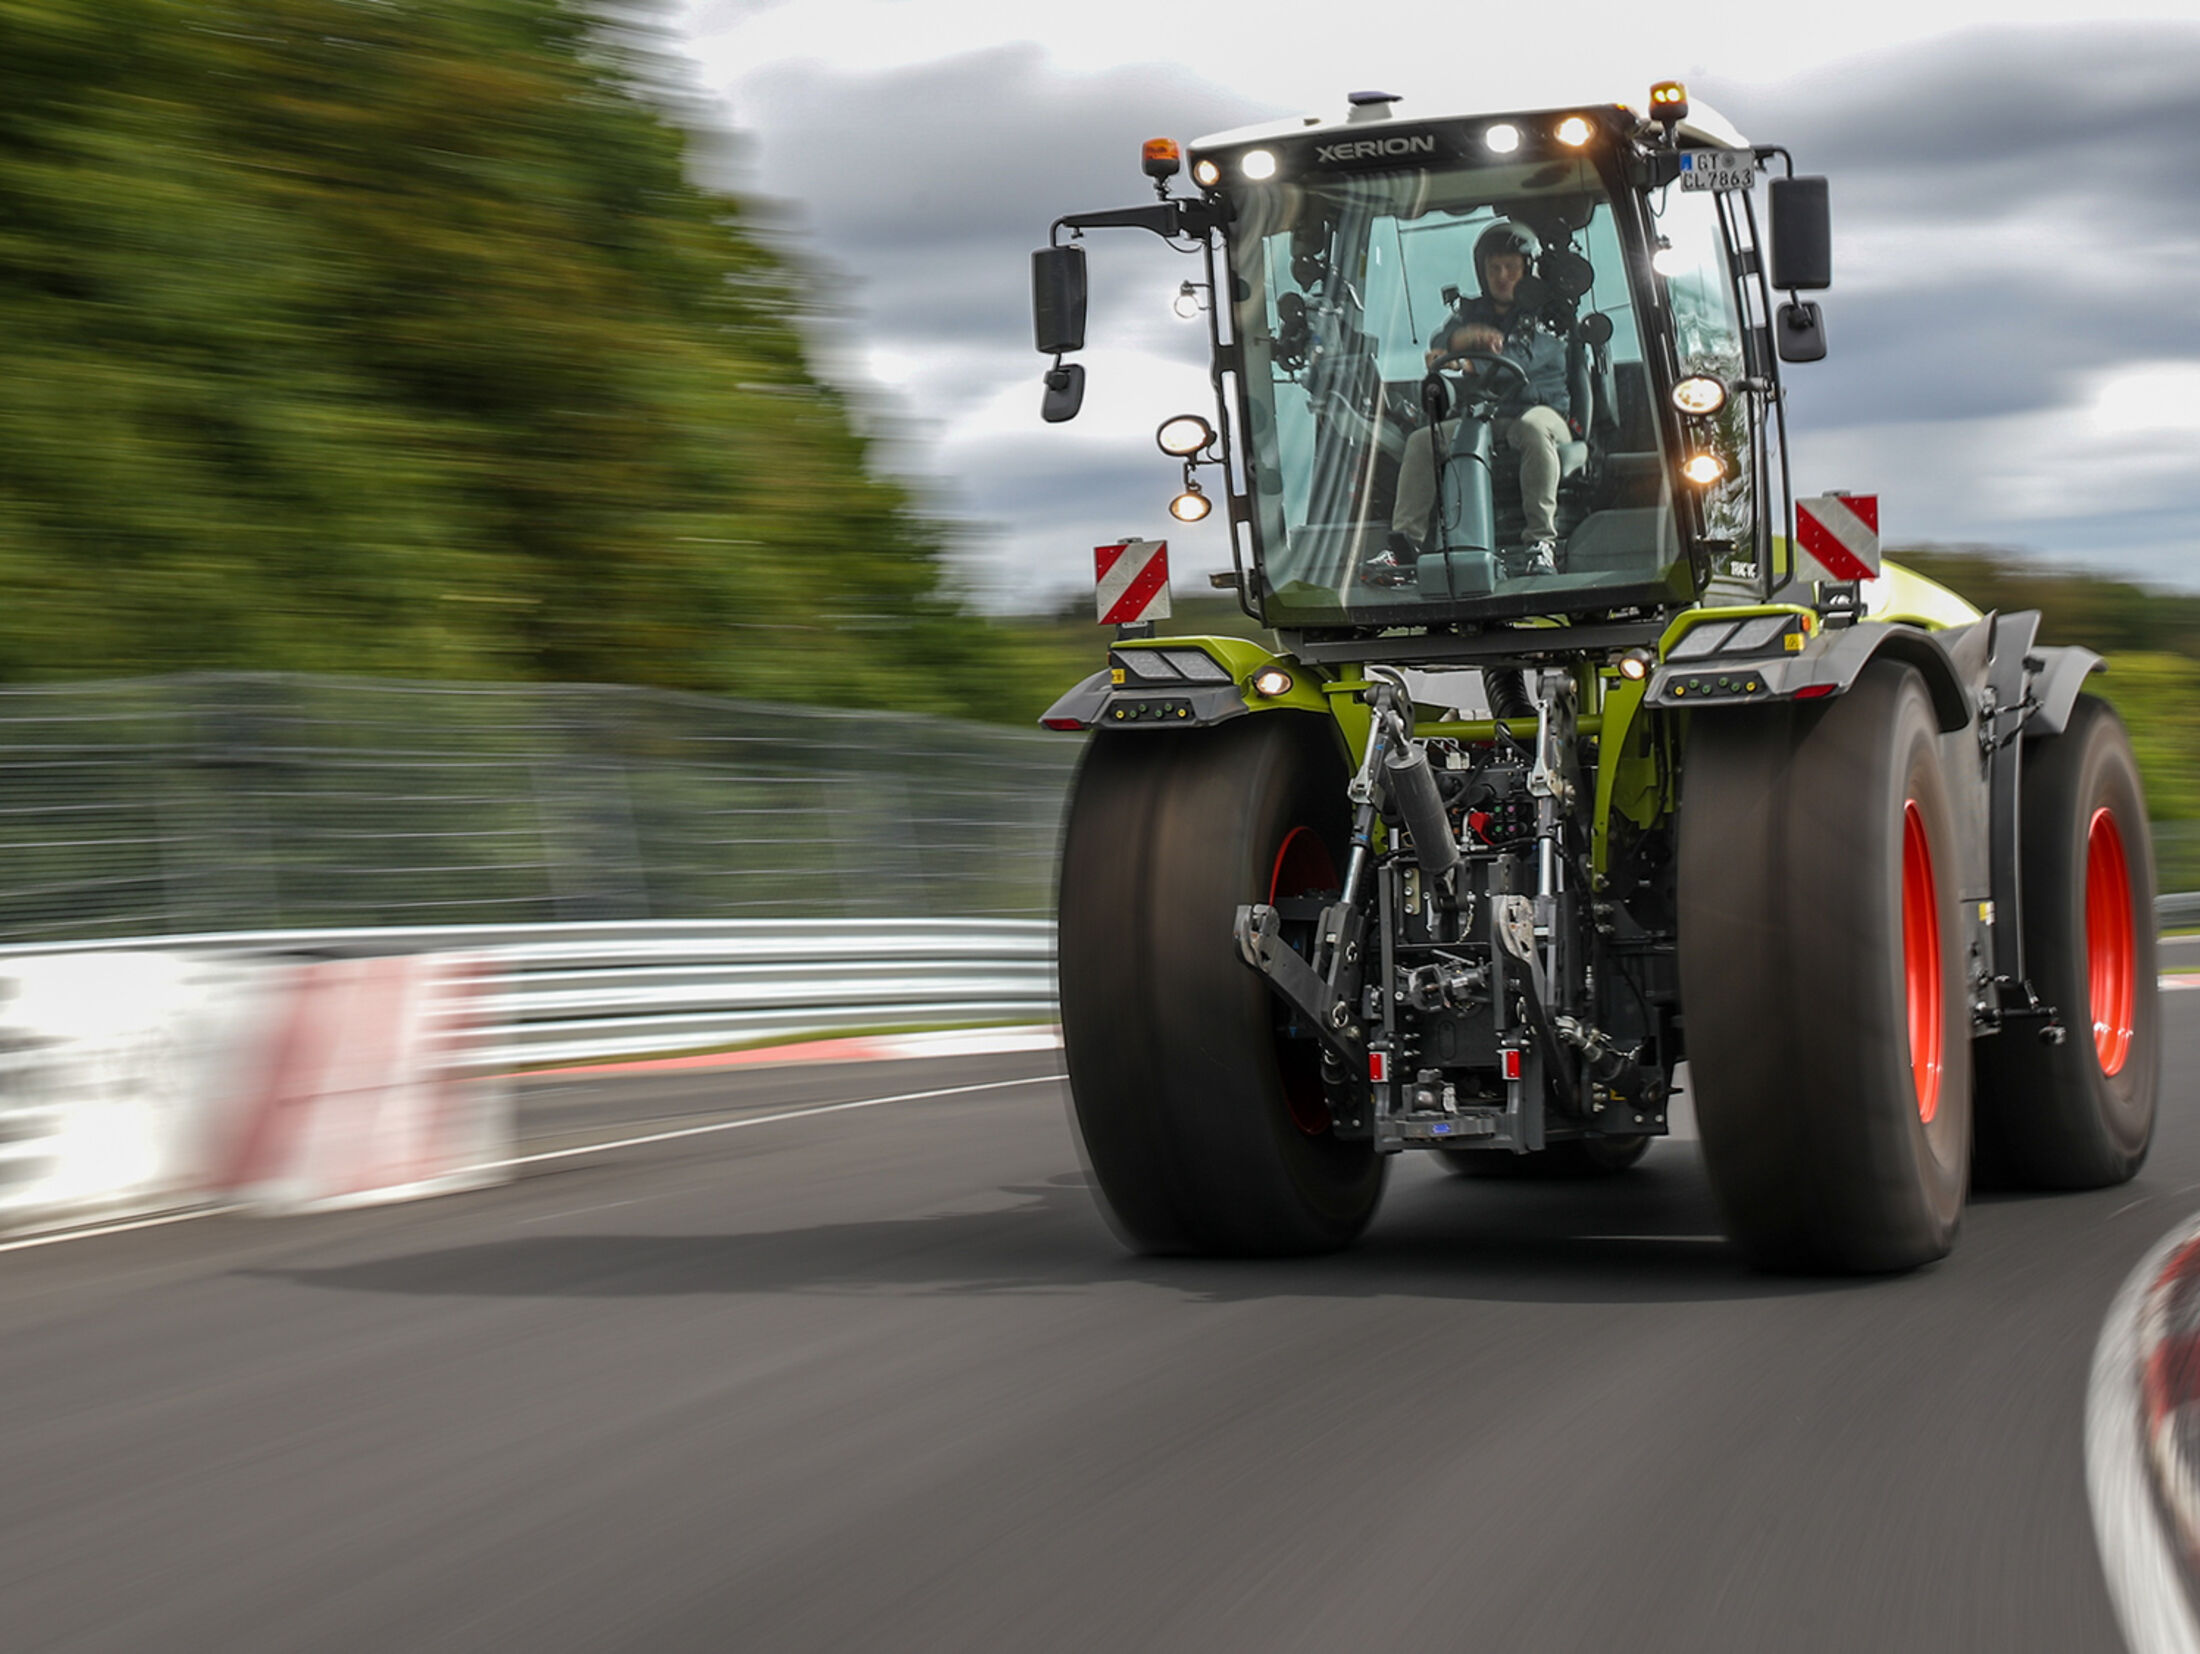 https://imgr1.auto-motor-und-sport.de/Claas-Xerion-5000-Traktor-Nordschleife-jsonLd4x3-f1f0d634-1717793.jpg